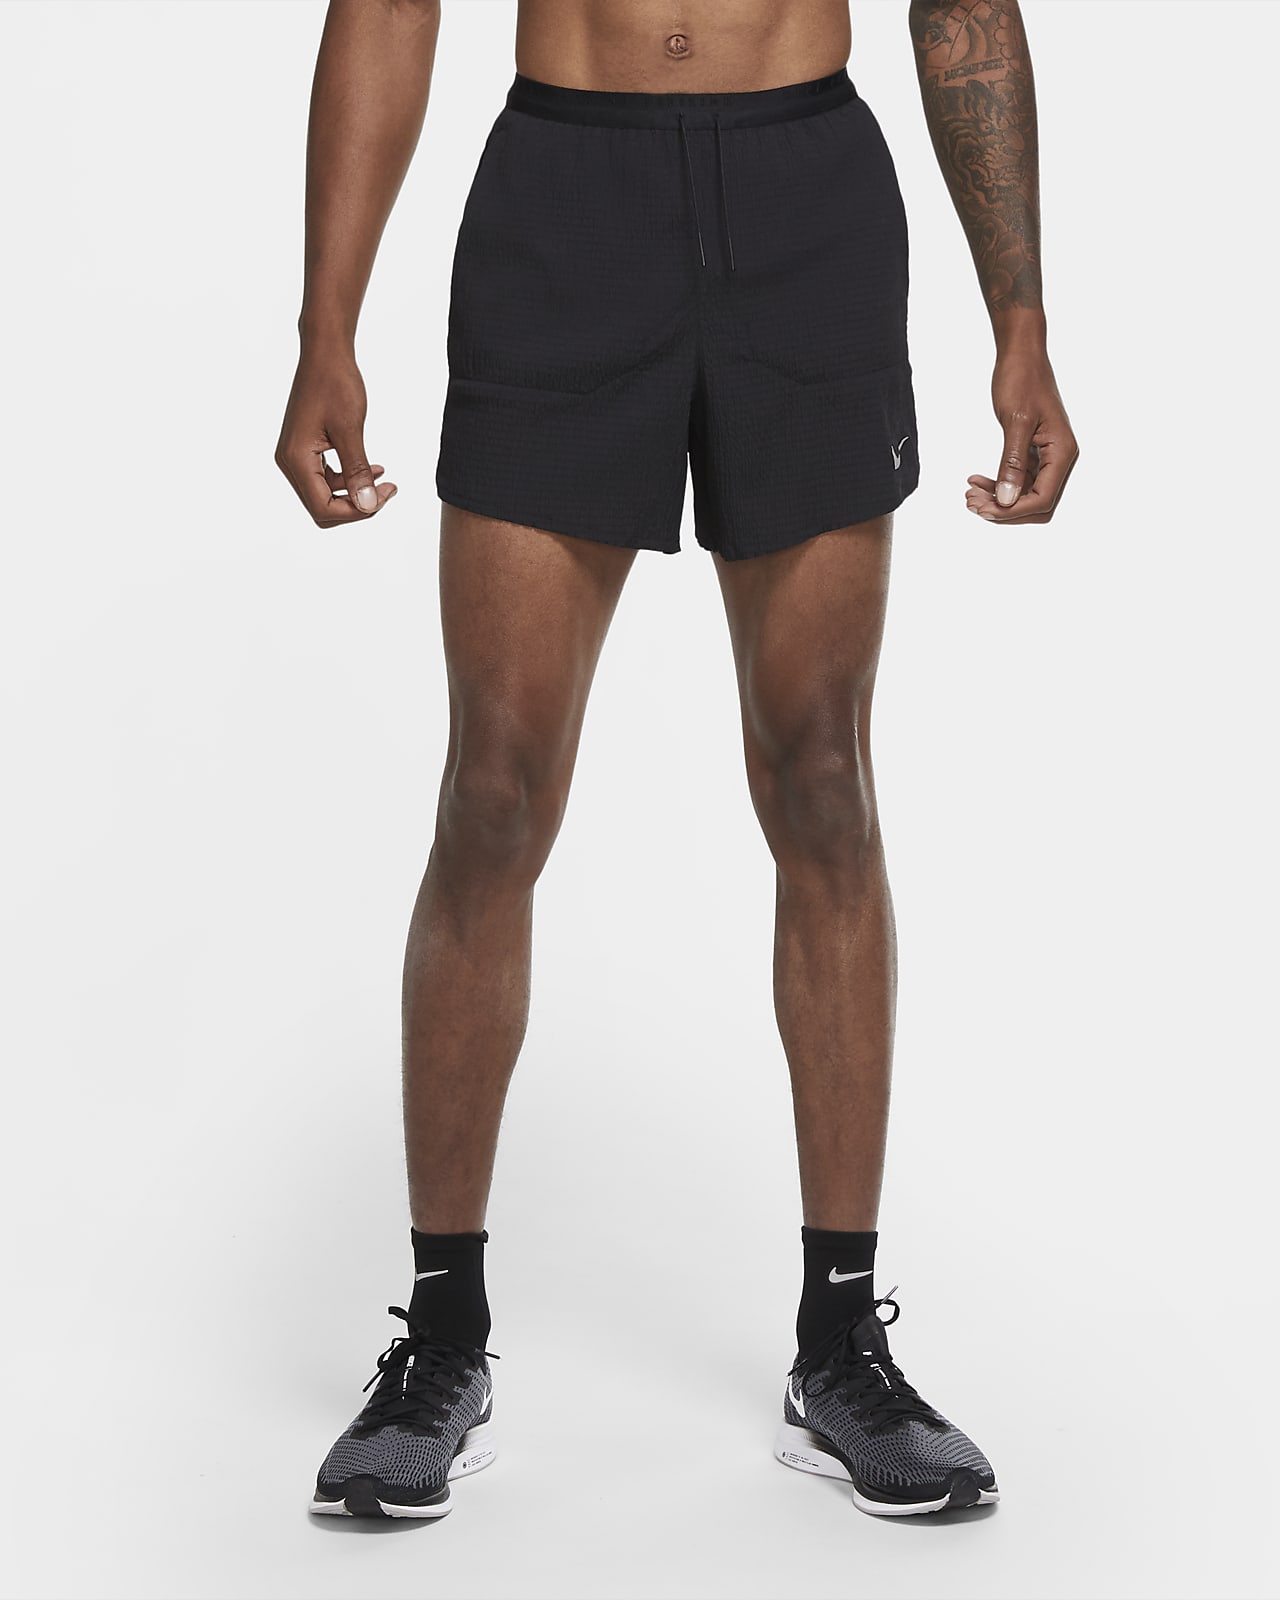 nike mens running shorts